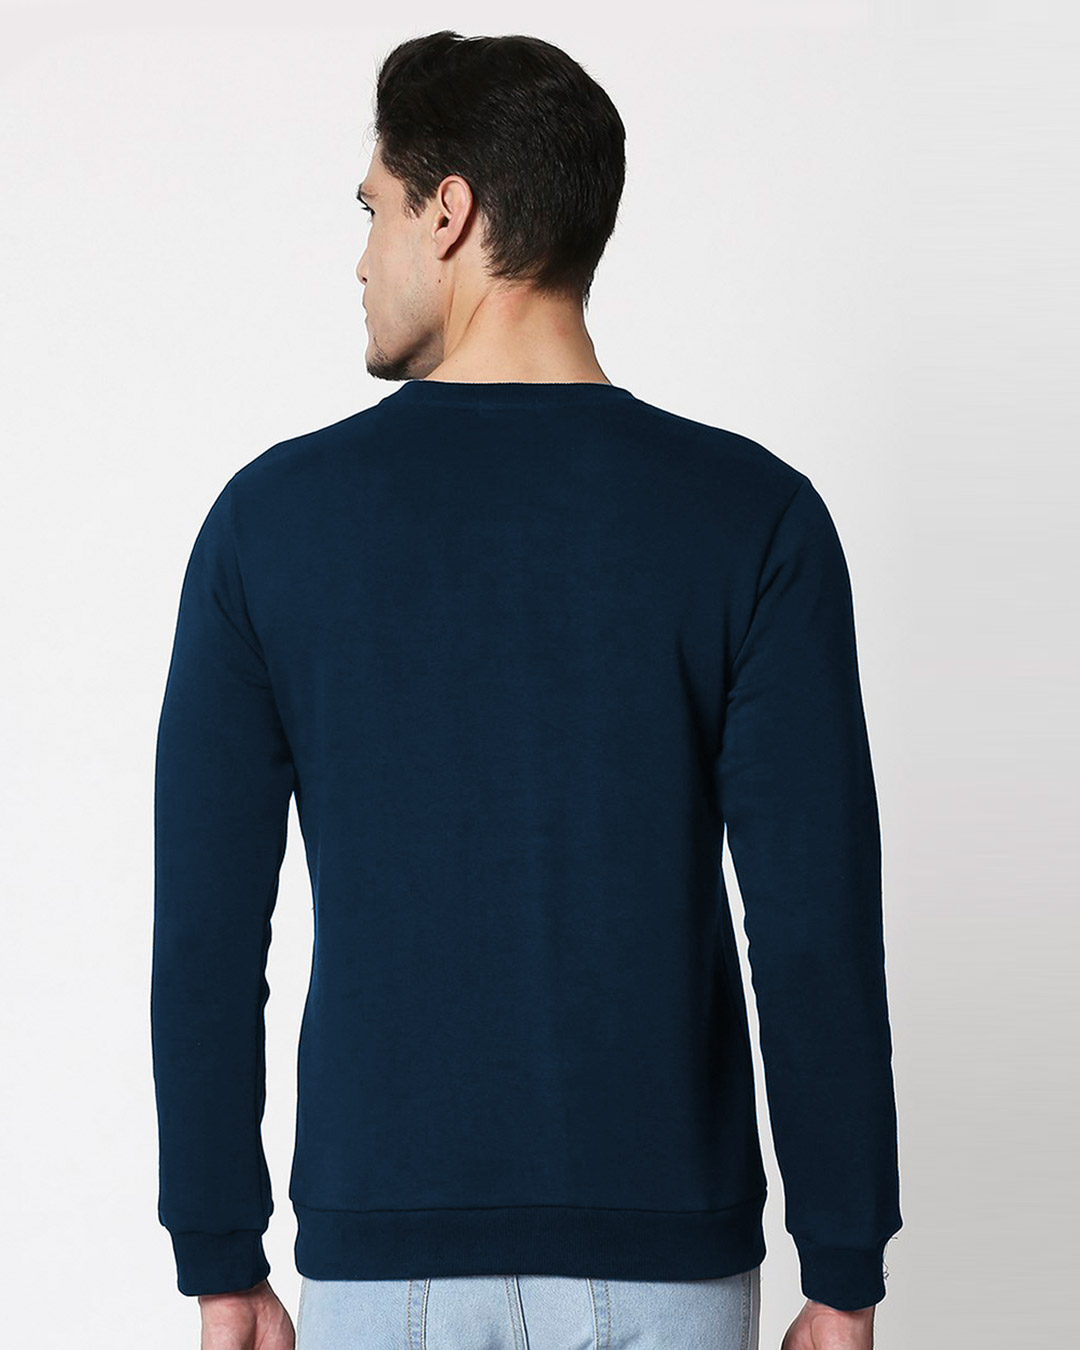 Shop Certified Troublemakers Fleece Sweatshirt (TJL) Navy Blue-Back